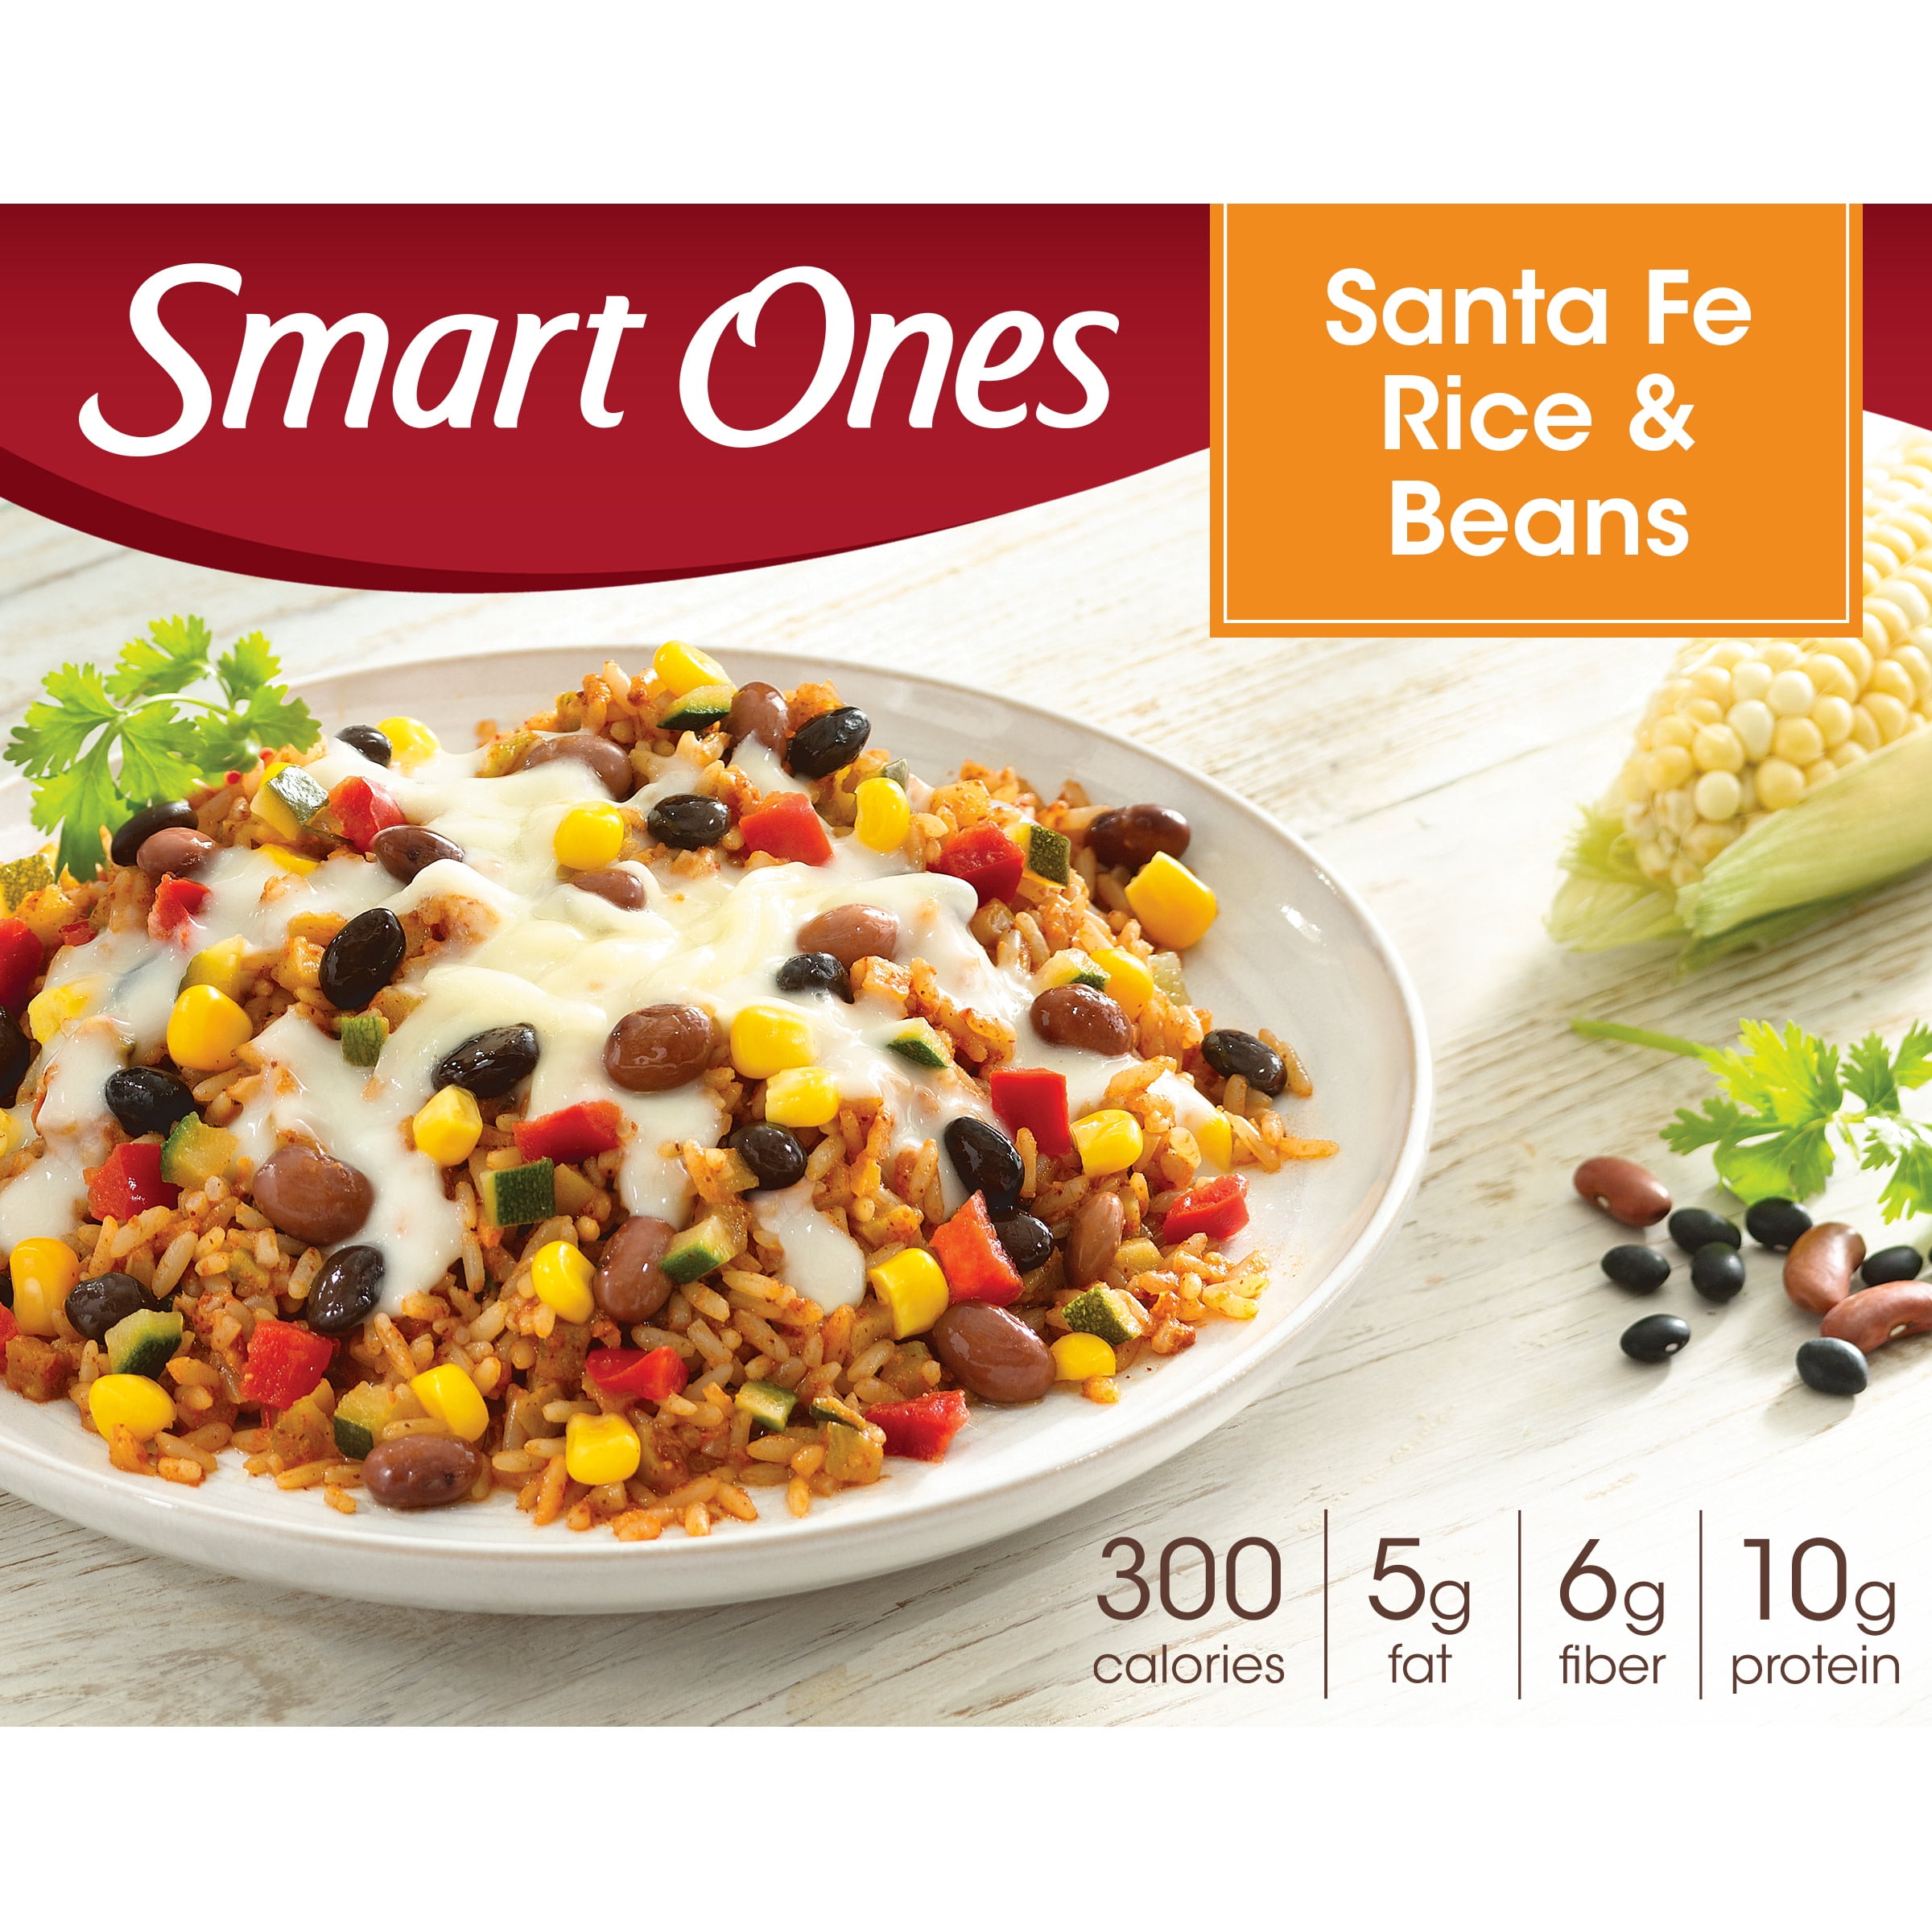 Smart Ones Santa Fe Rice & Beans Frozen Meal, 9 Oz Box